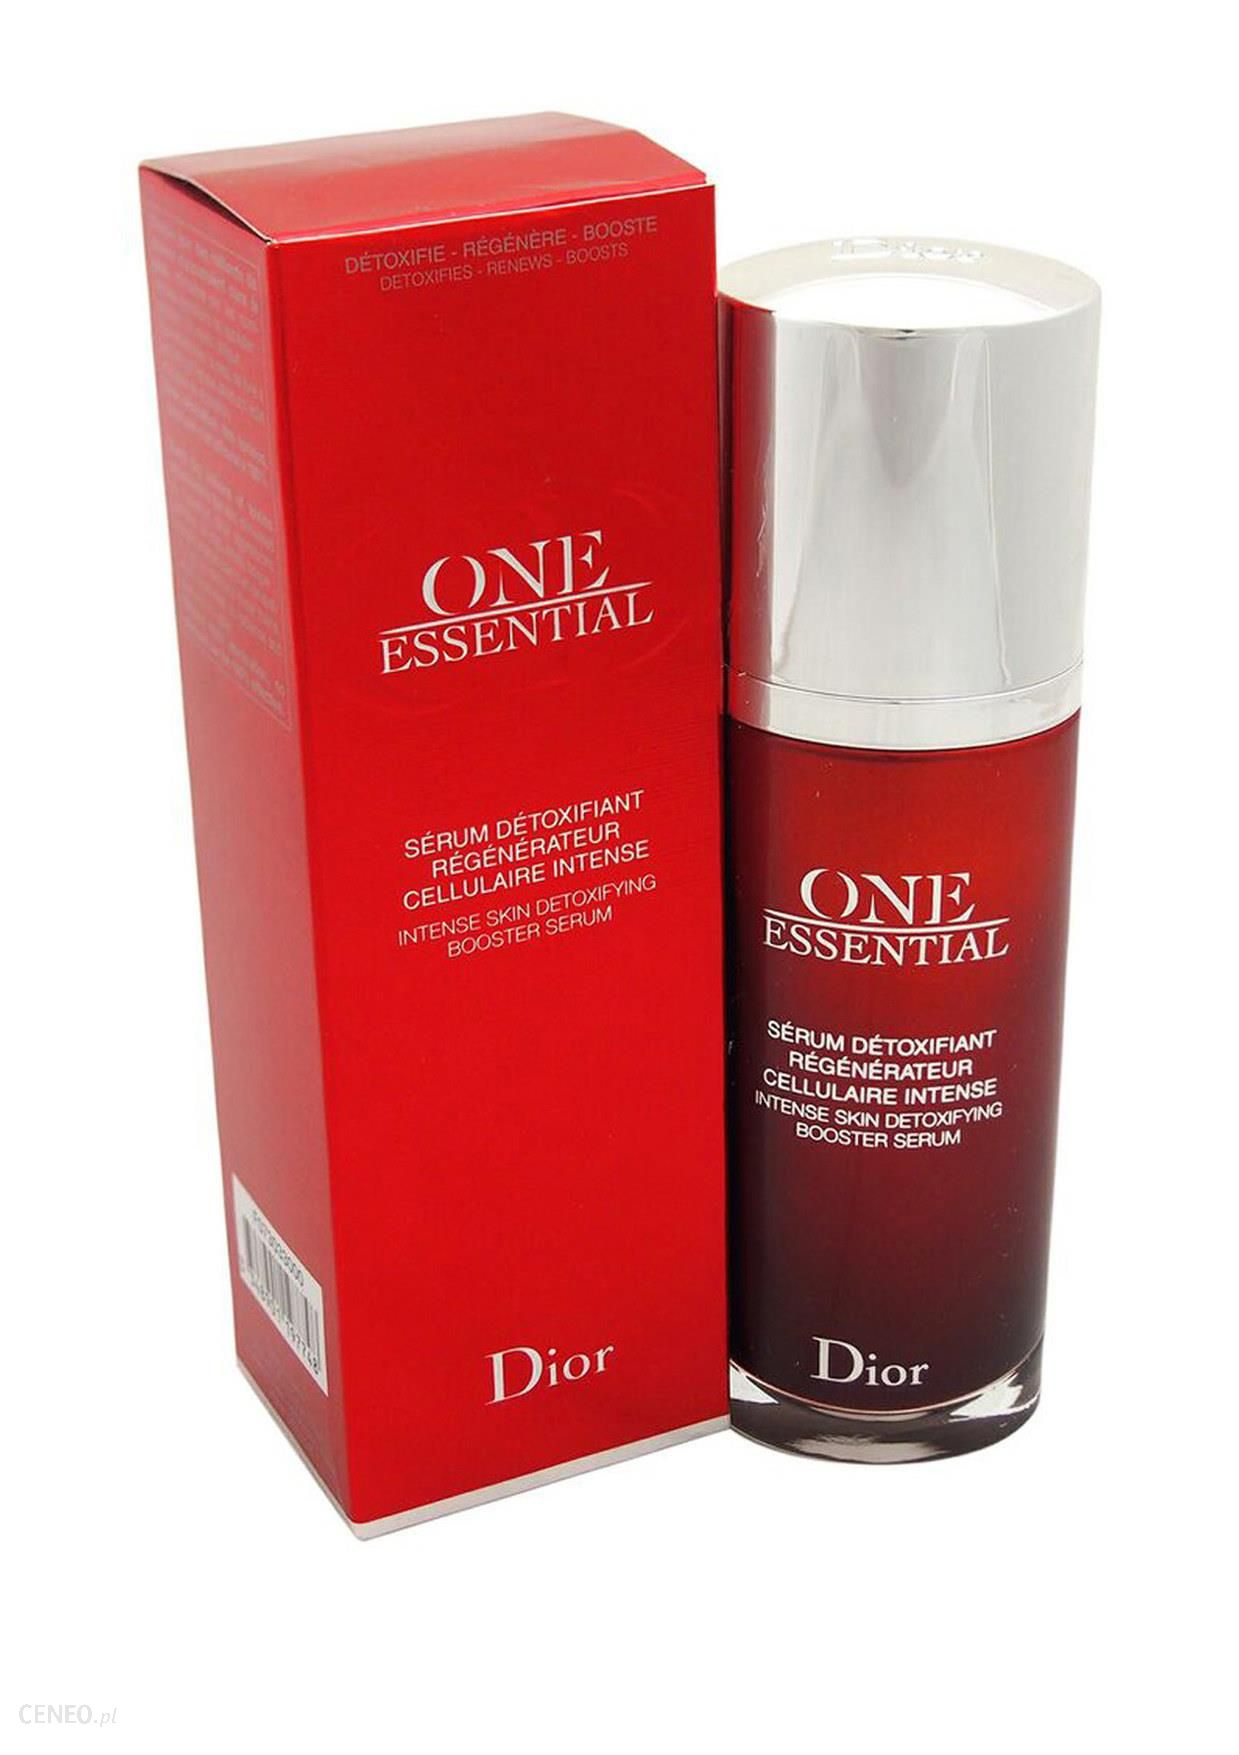 Christian Dior One Essential Intense Skin Detoxifying Booster detoksykujące 30ml